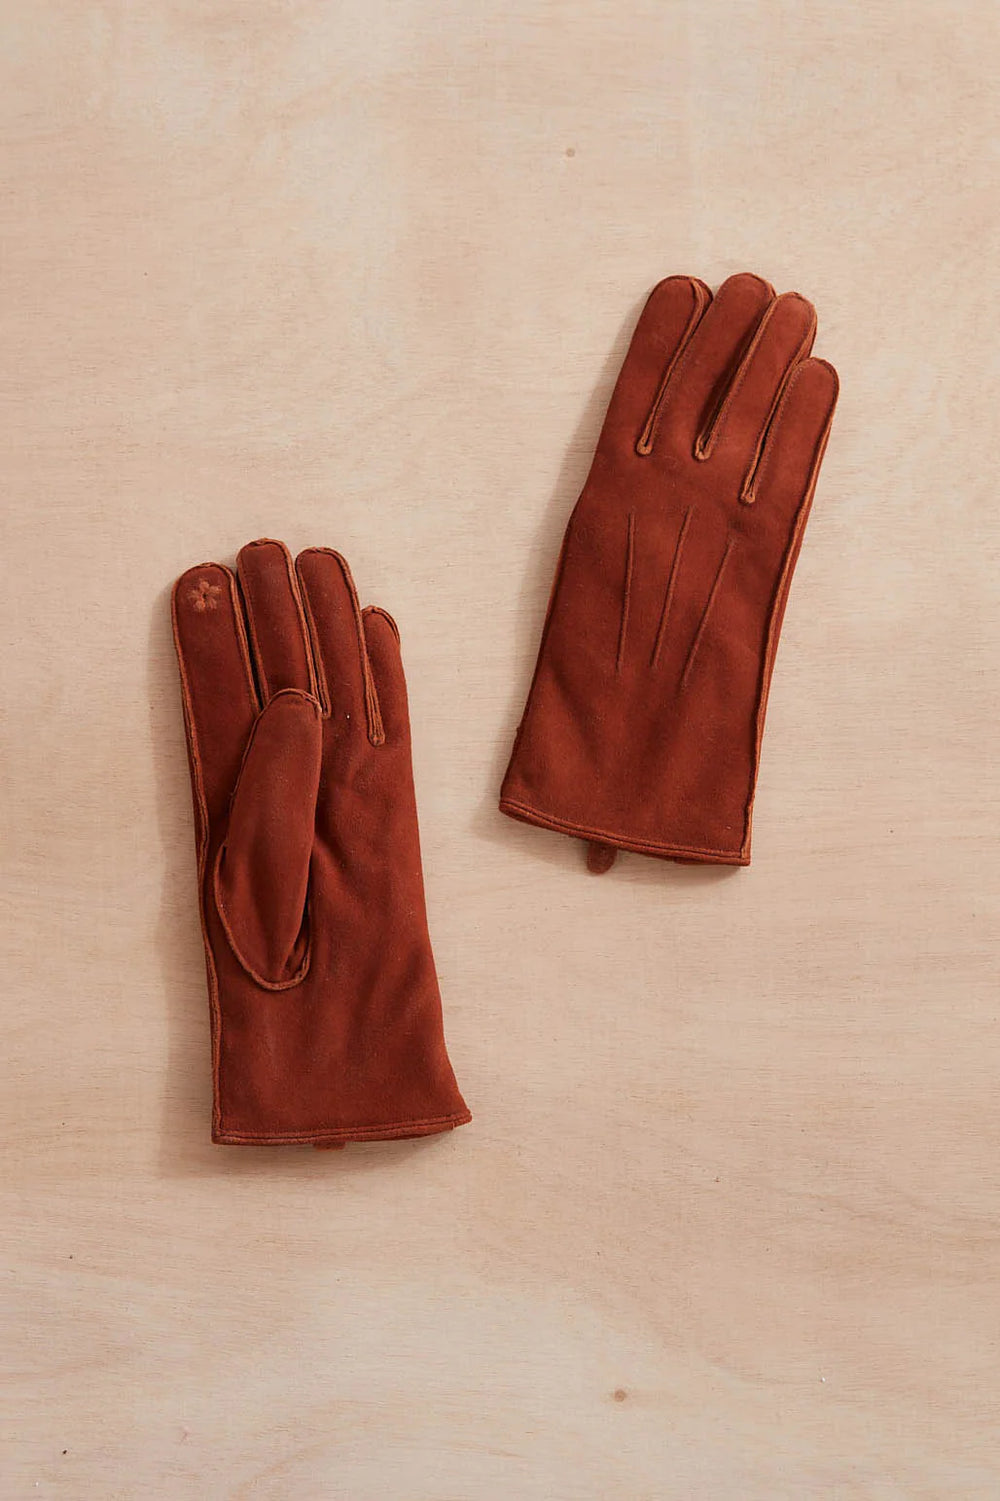 Jojo Shearling Suede Gloves in Camel - Madison&